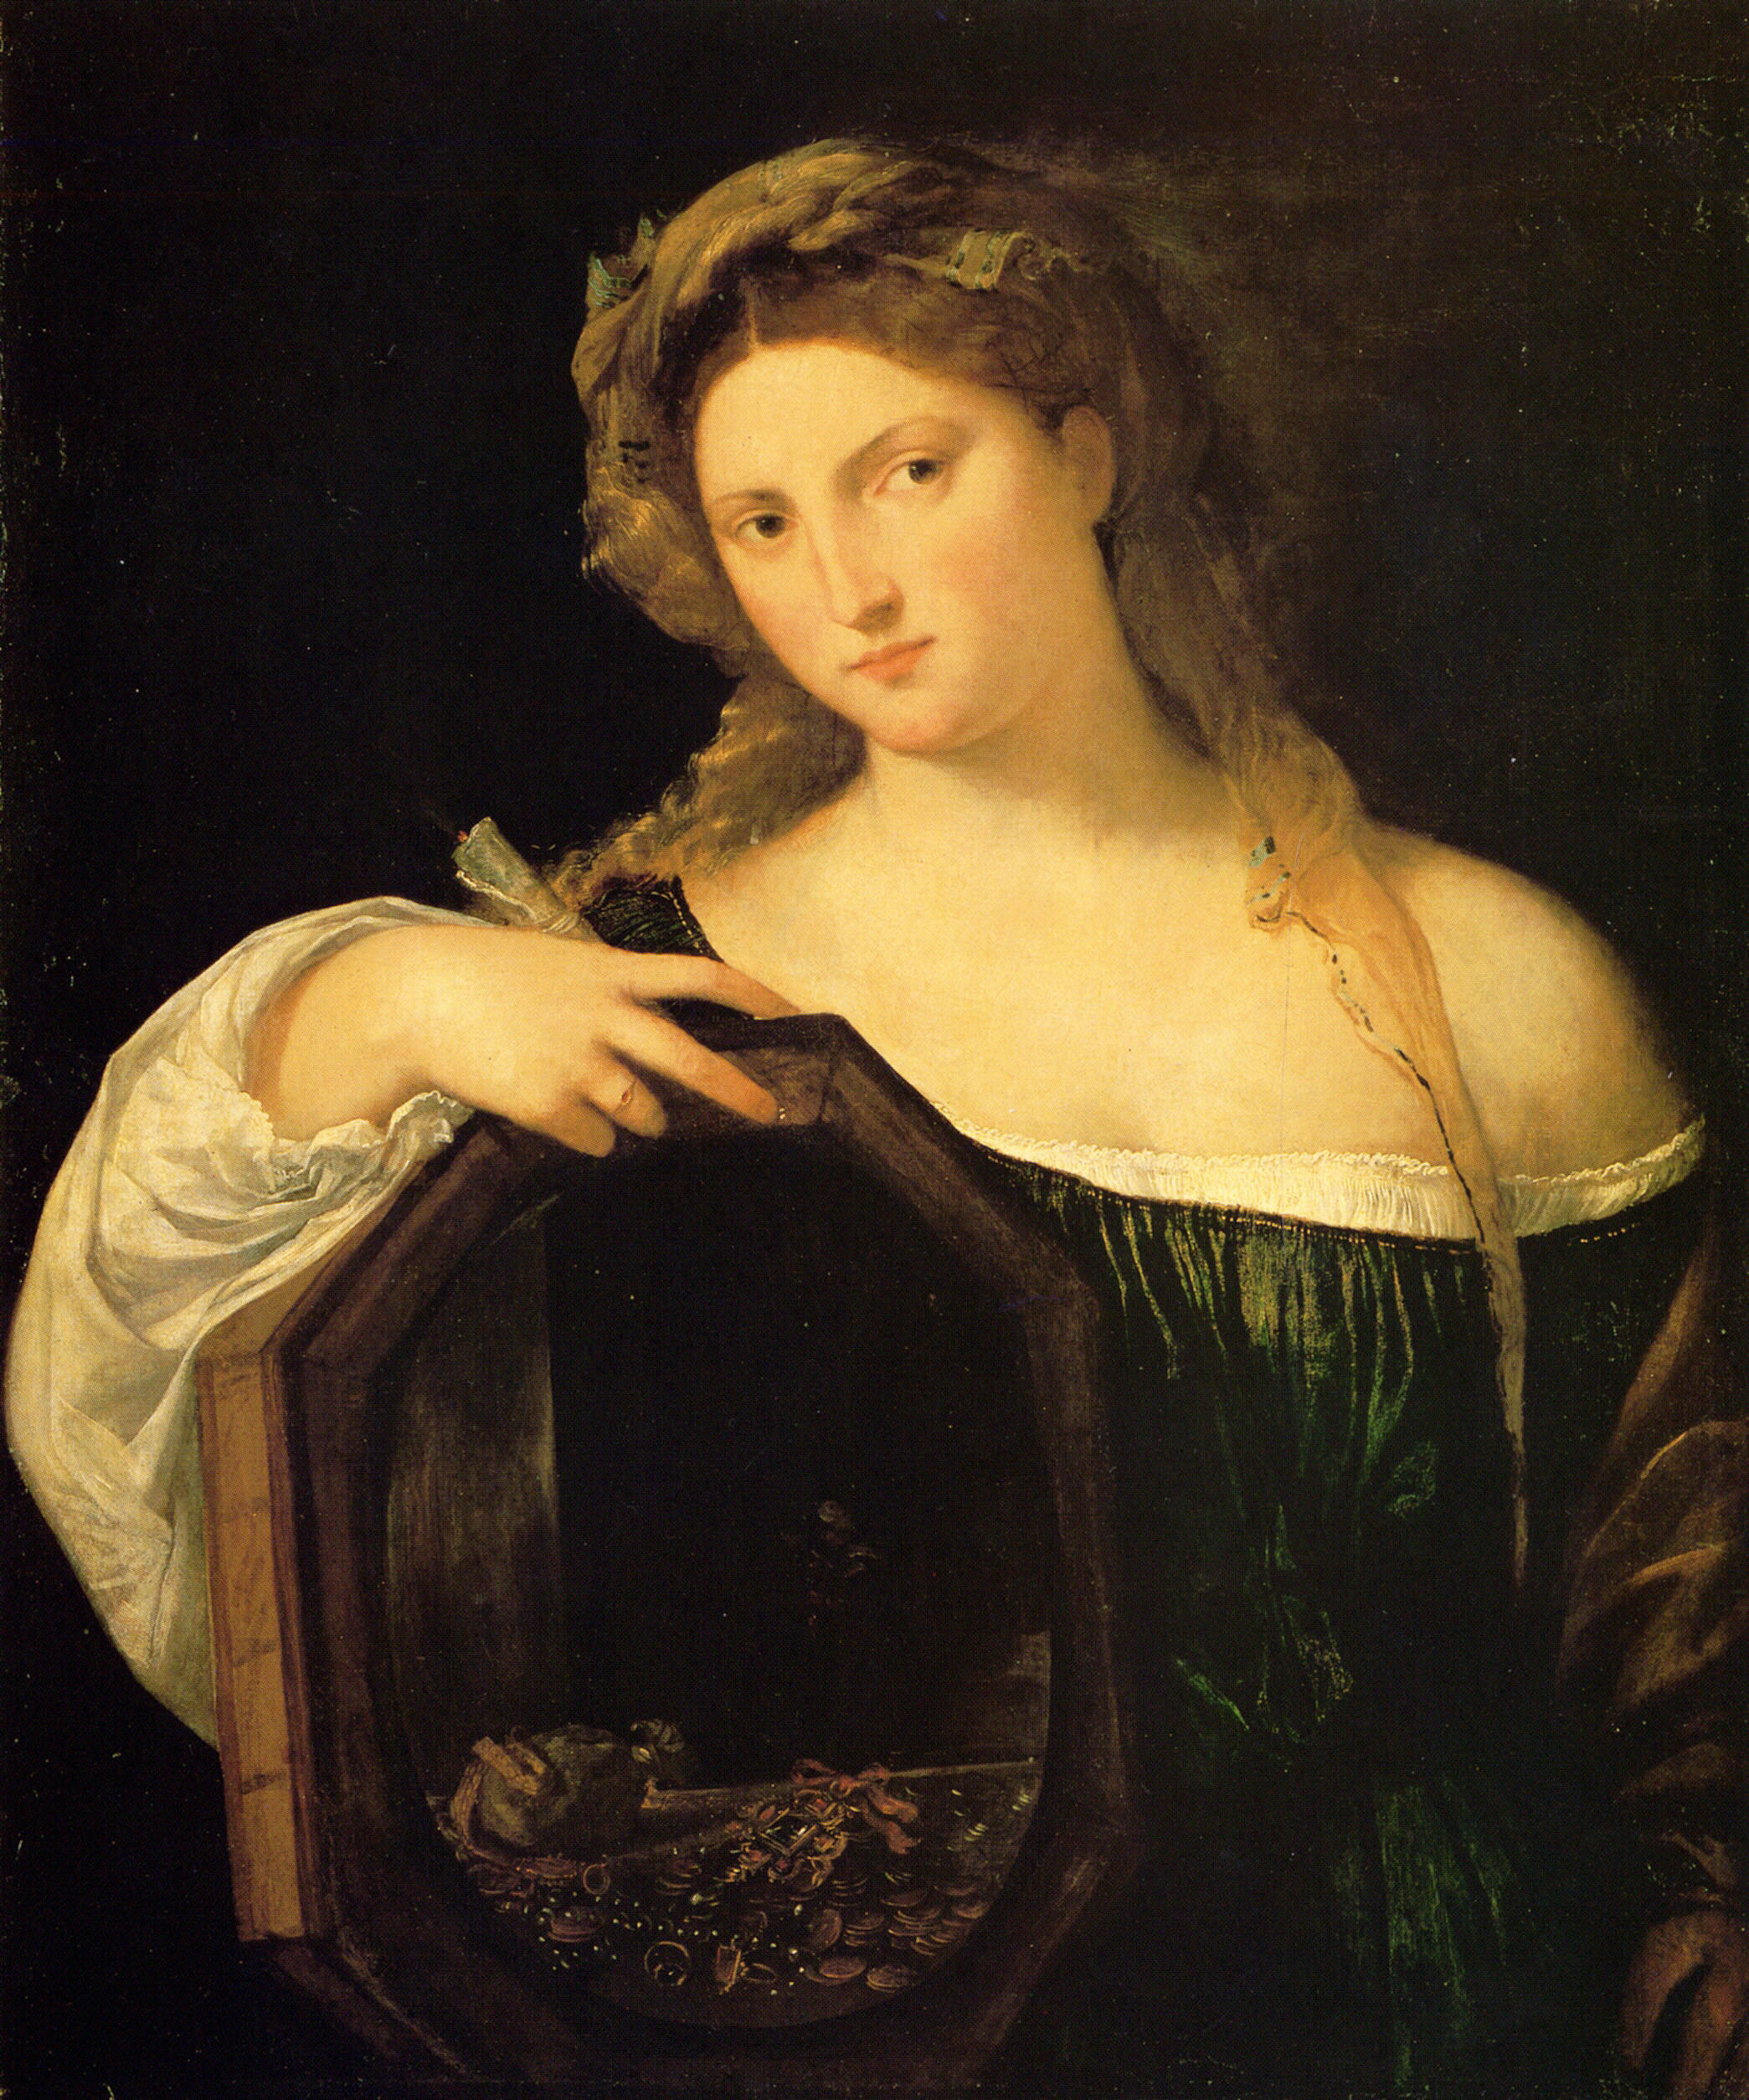 Miłość ziemska (Próżność) by  Titian - 1515 - 65 x 51 cm 